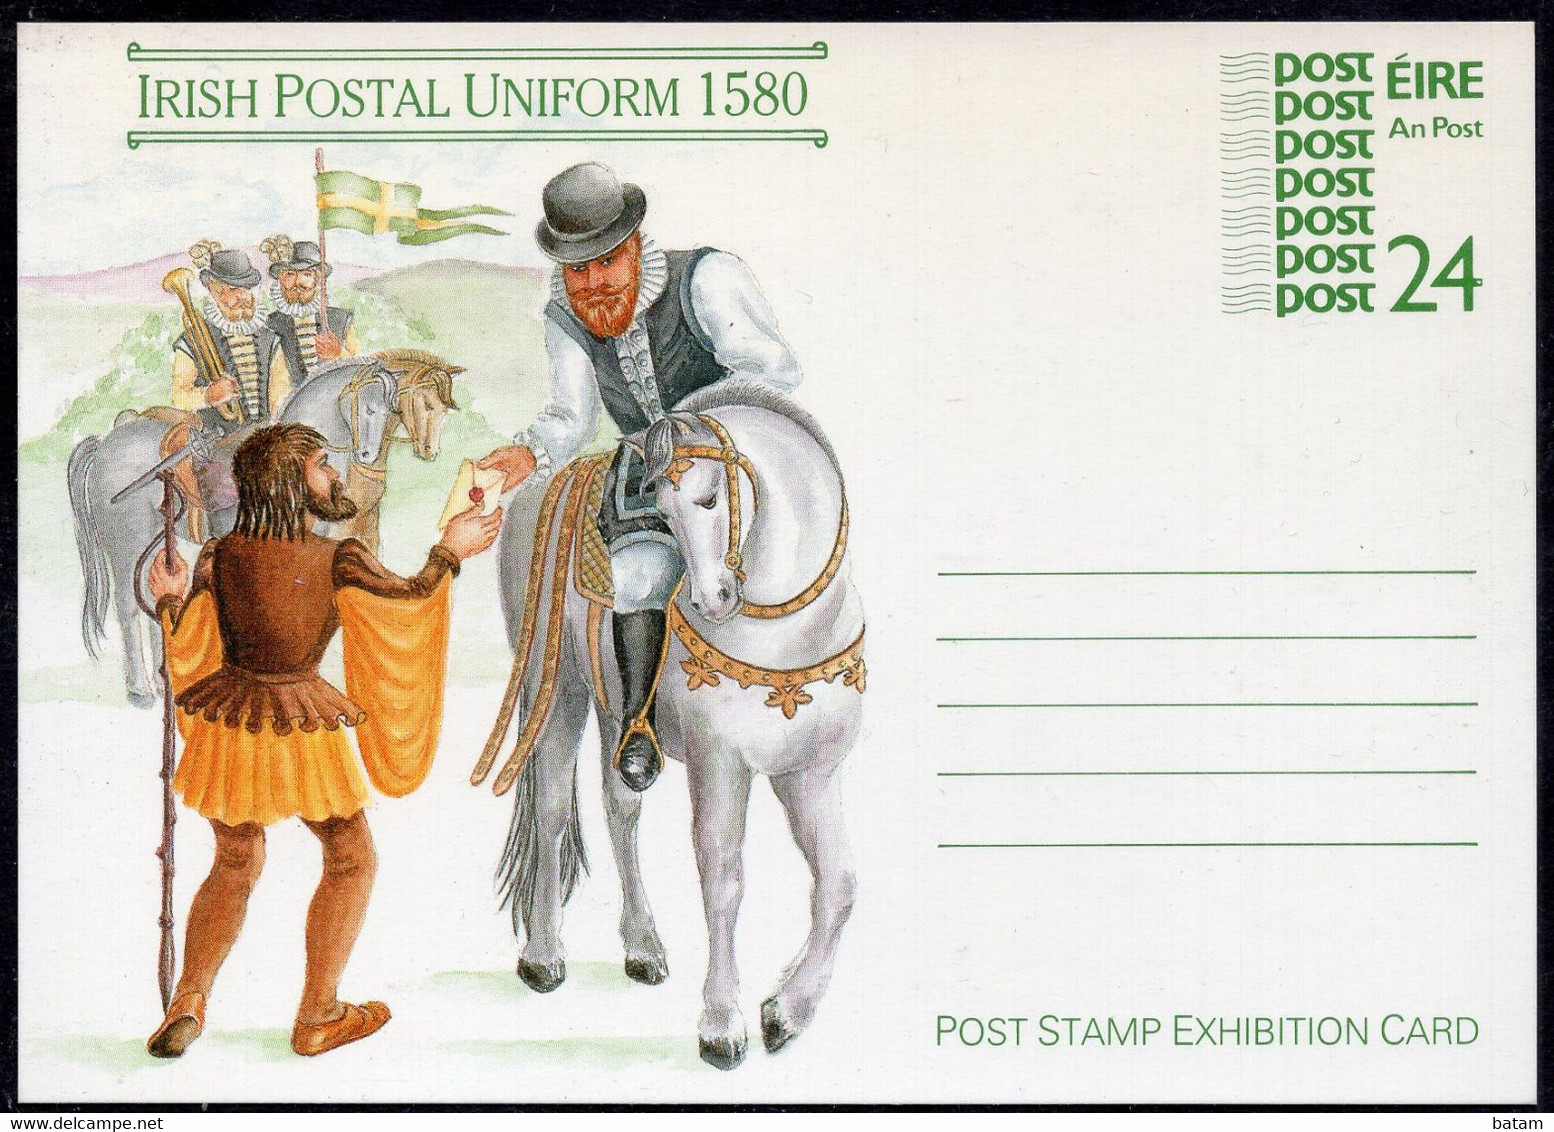 111 - Ireland - Irish Postal Uniform 1580 - Post Stamp Exhibition Card - Unused - Postal Stationery